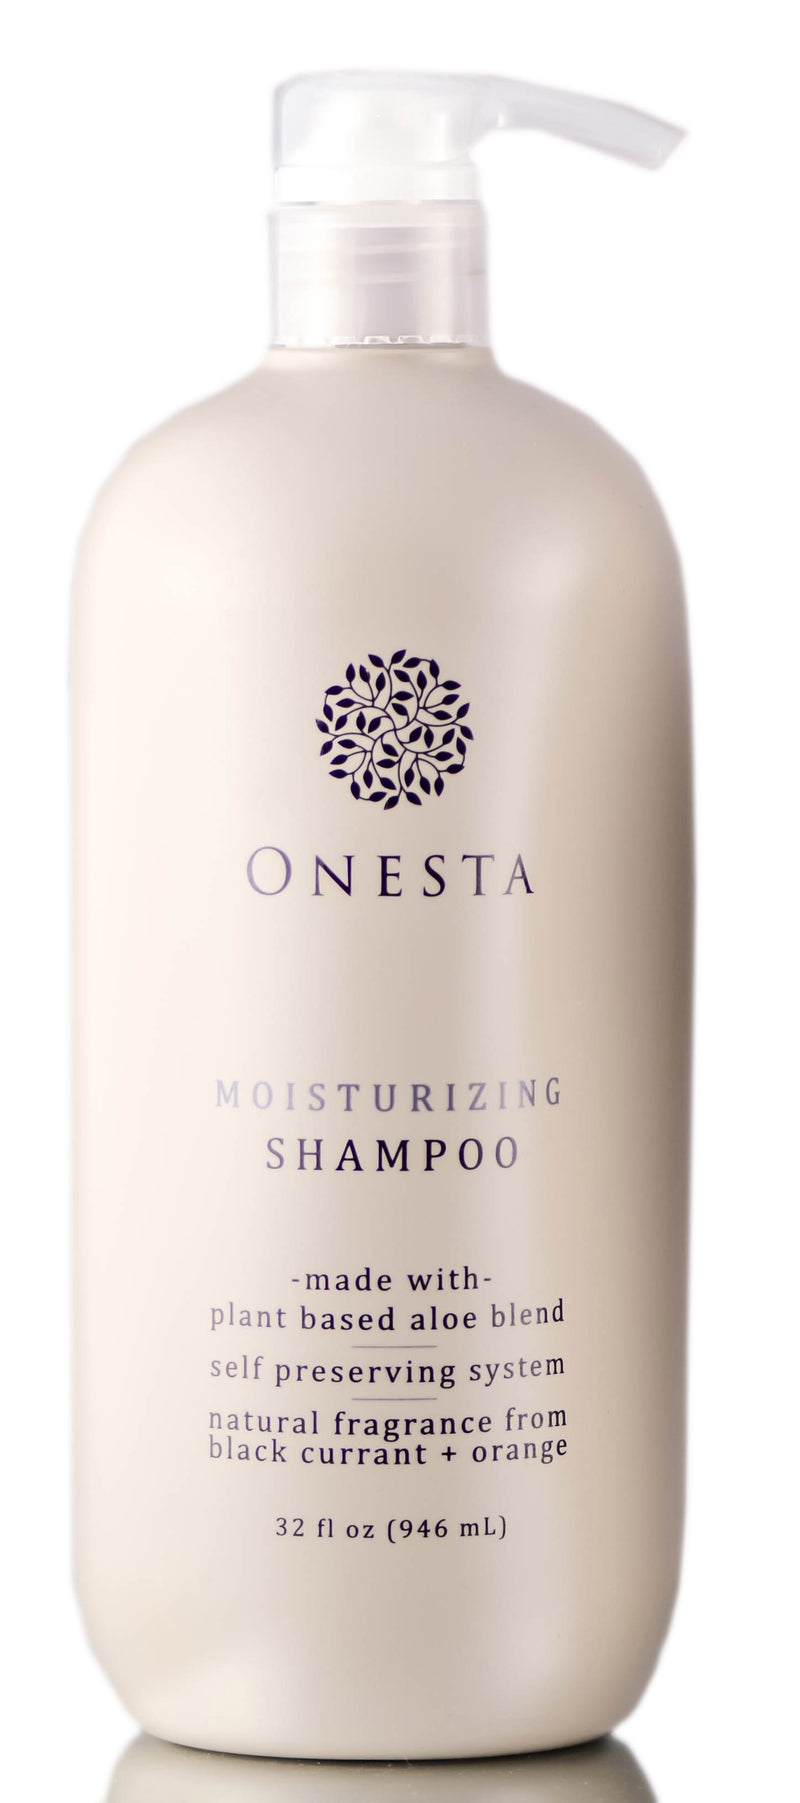 Onesta Moisturizing Shampoo